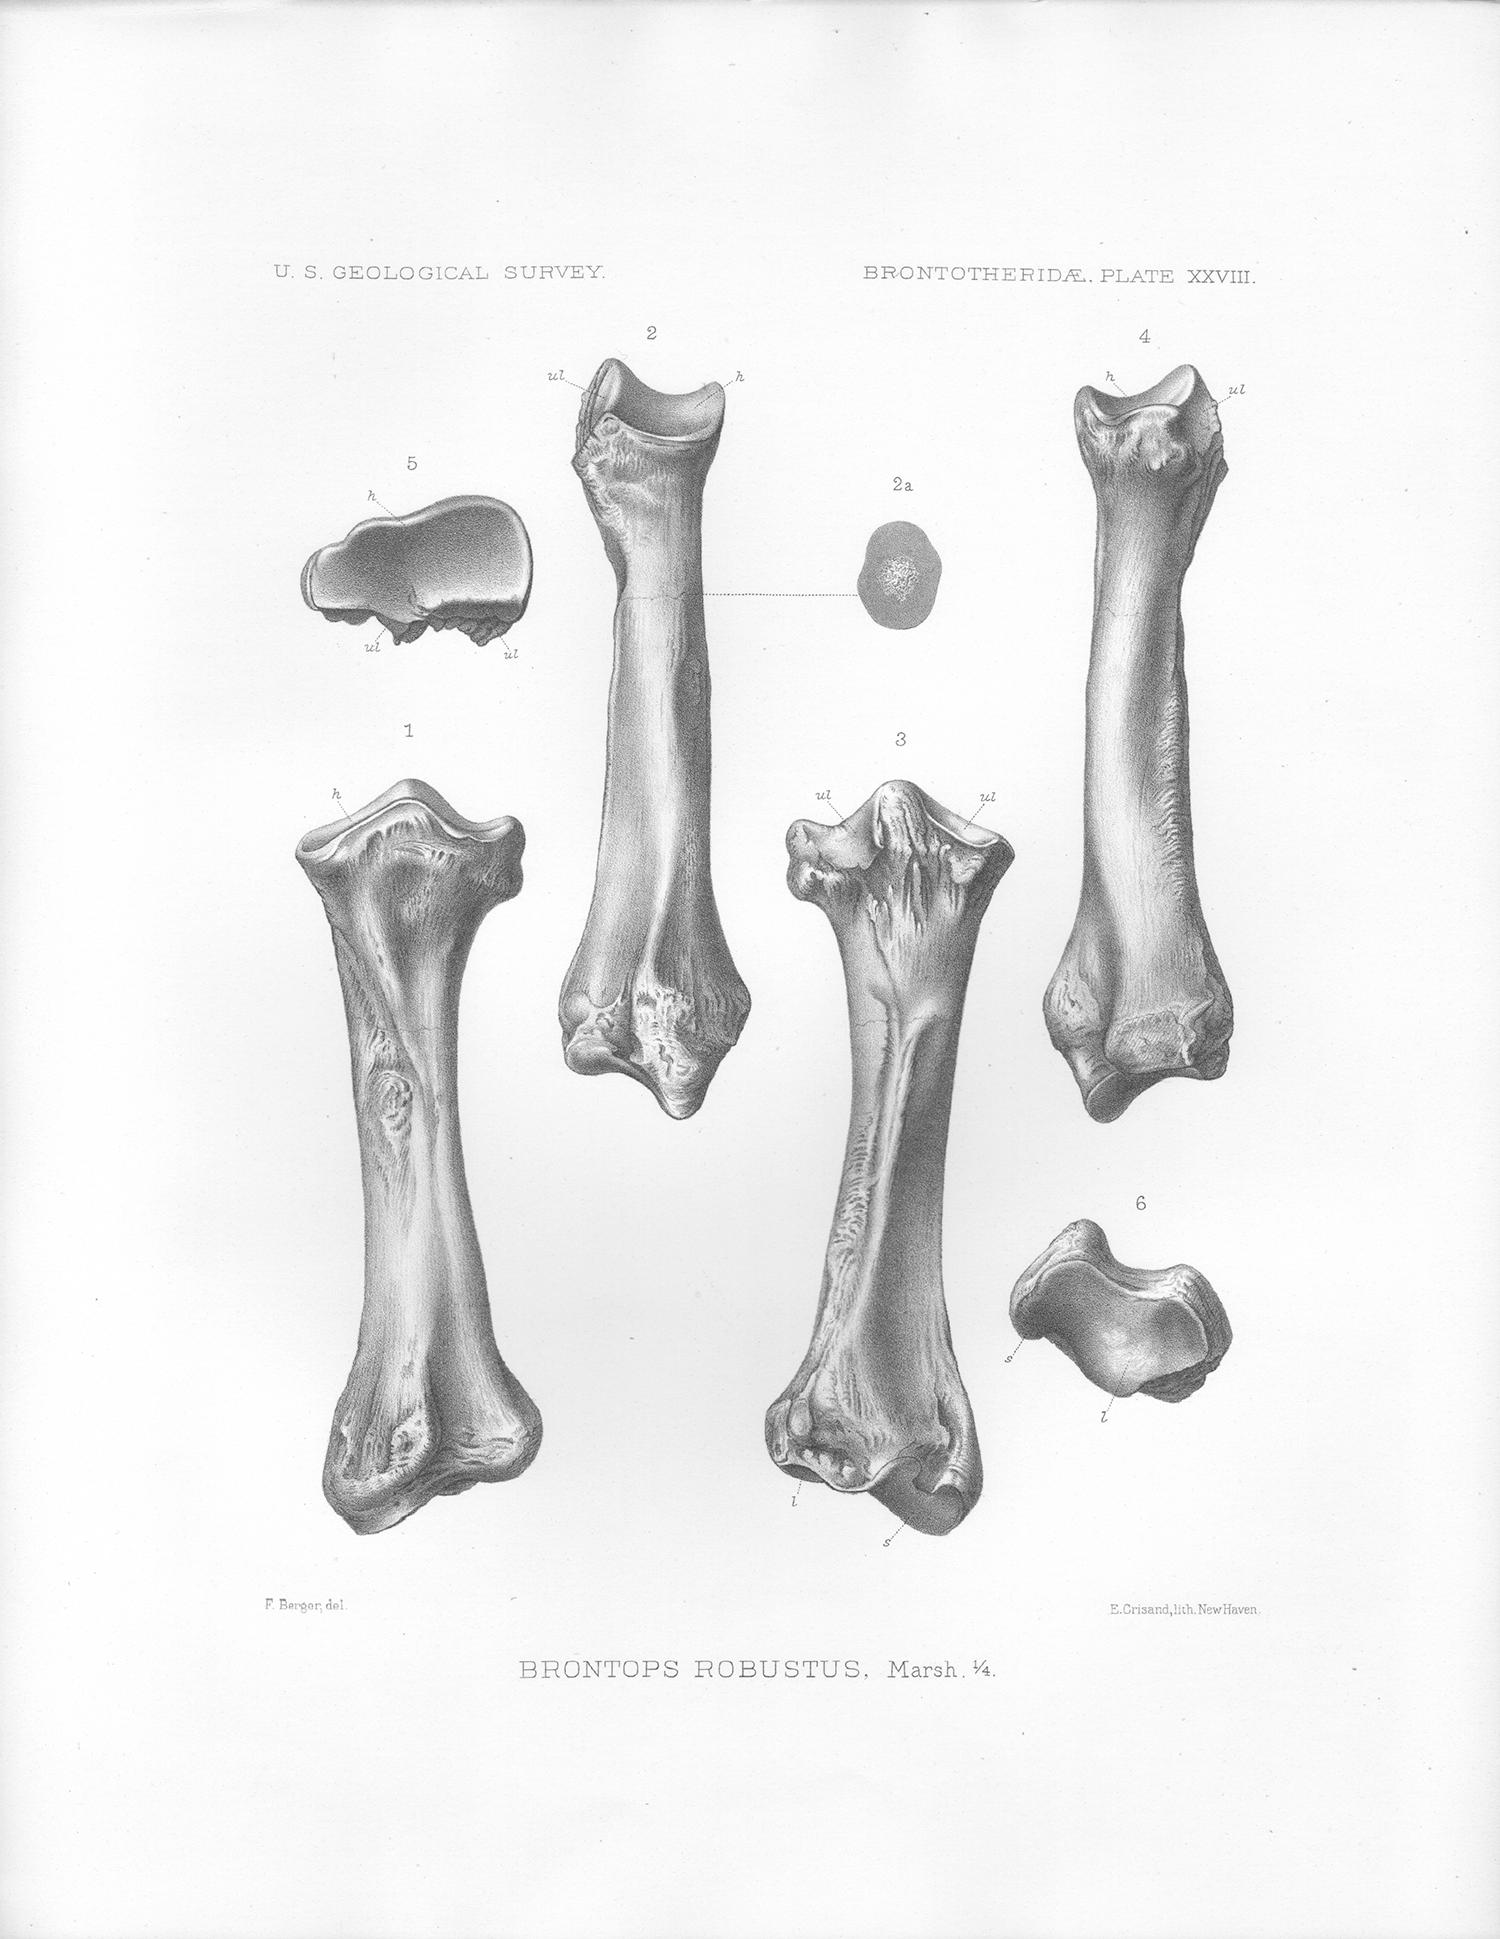 Brontops Robustus, antique Como Bluff dinosaur bone lithograph print